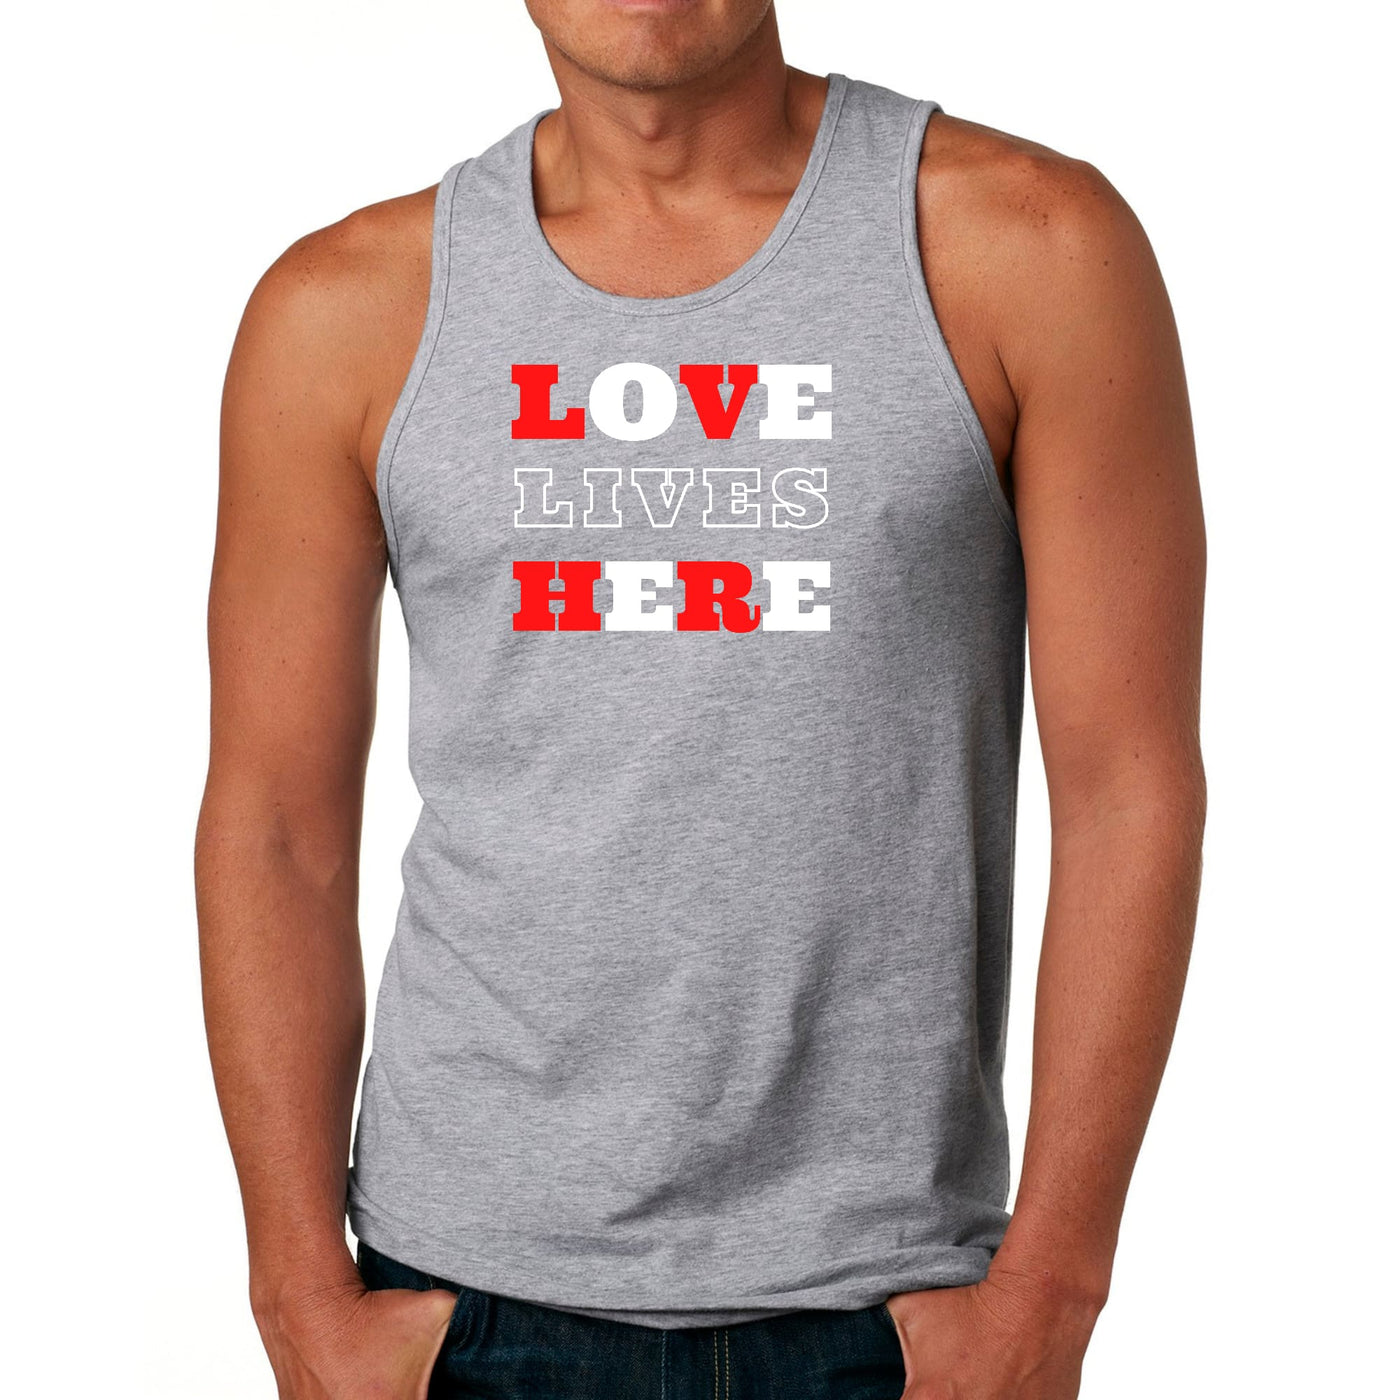 Mens Tank Top Fitness T-shirt Love Lives Here Christian Inspiration - Mens